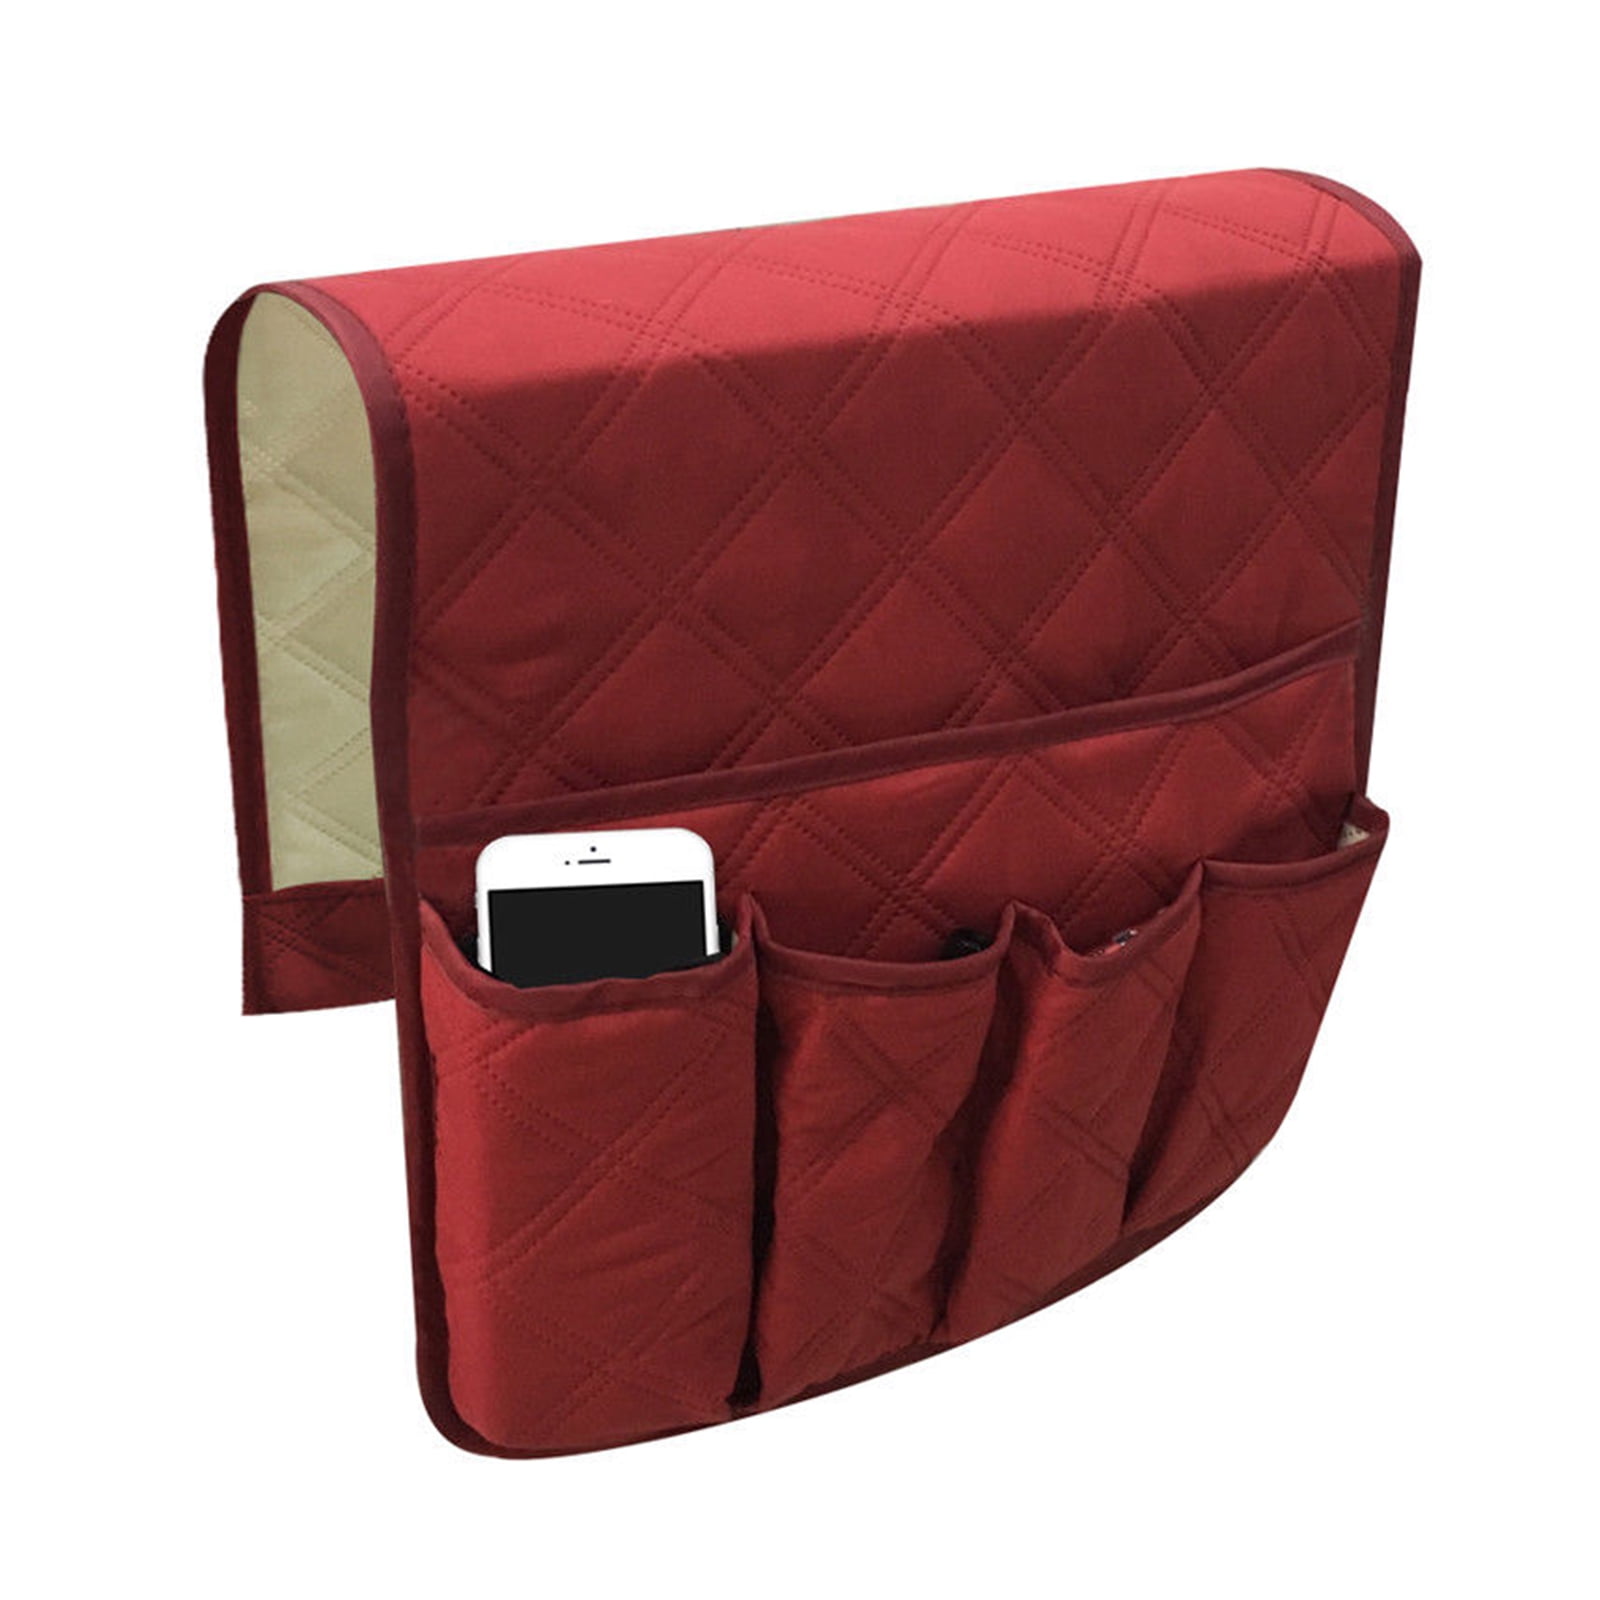 Couch Pocket Remote Control Caddy Arm Chair Holder Storage Organizer Armrest NEW 